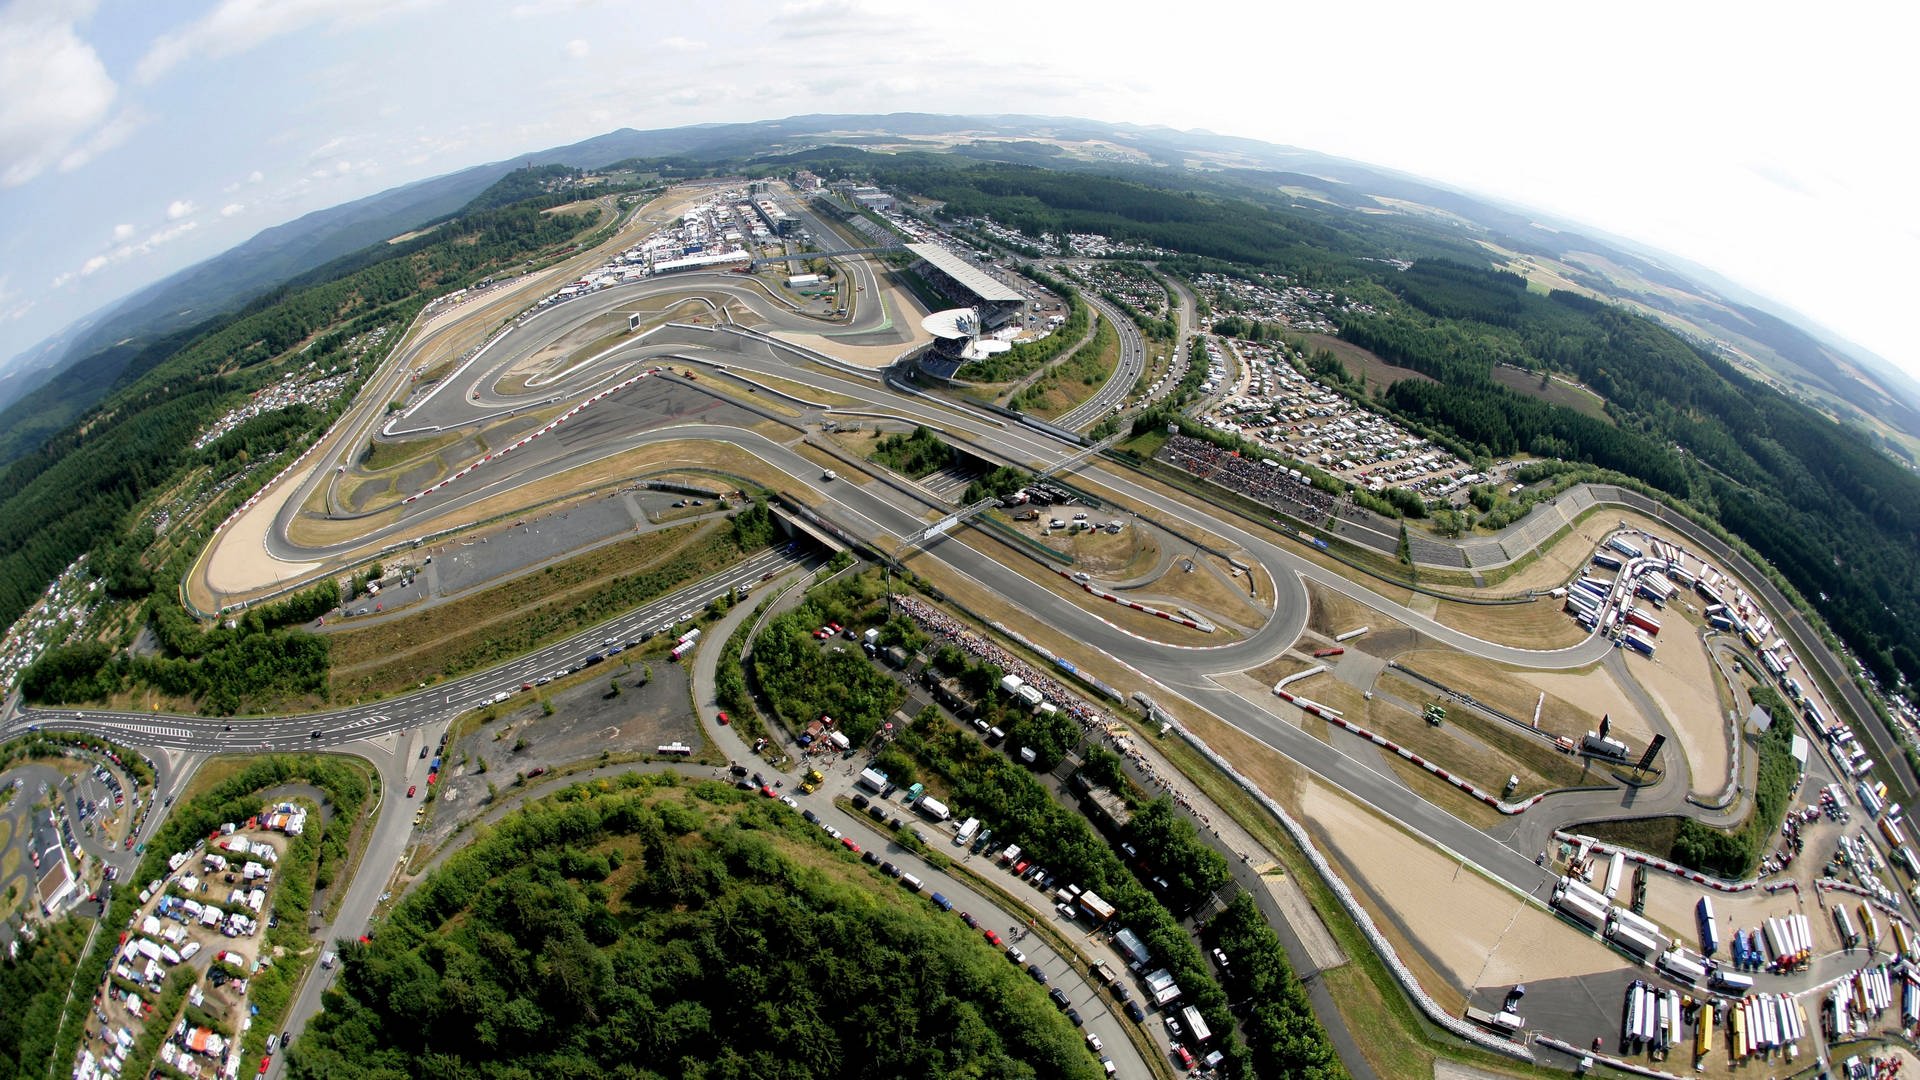 Grand-Prix-Strecke am Nürburgring feiert Geburtstag